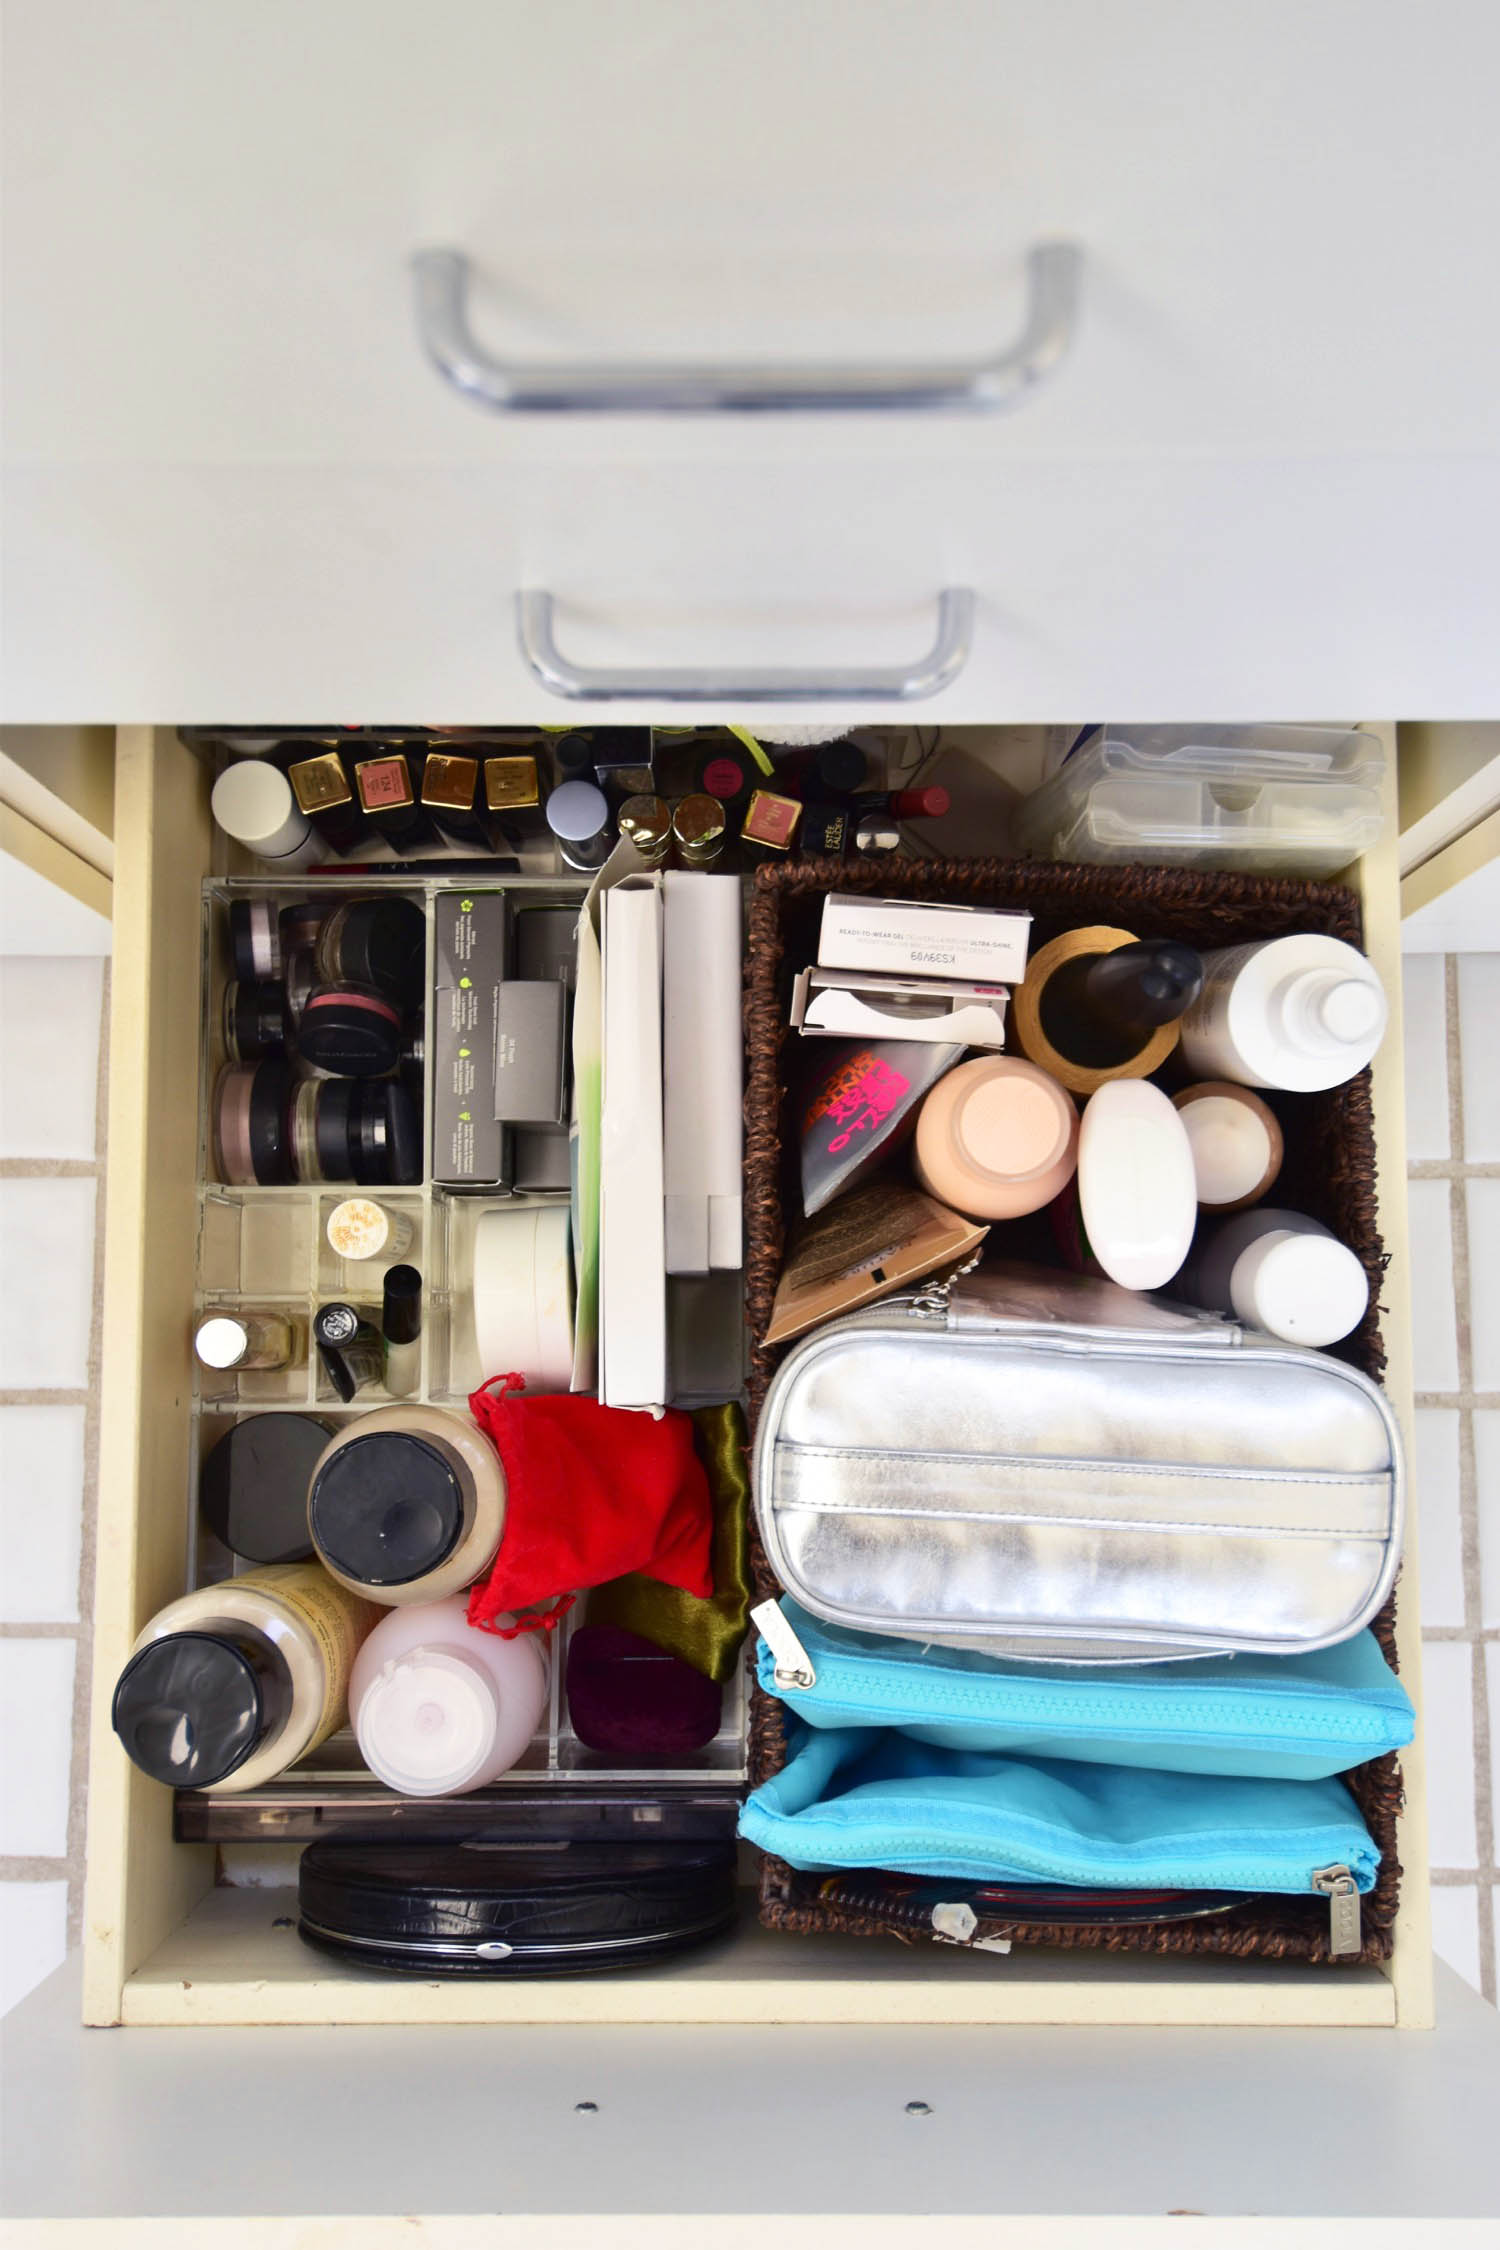 Bathroom drawer Organization, Beauty and makeup storage ideas